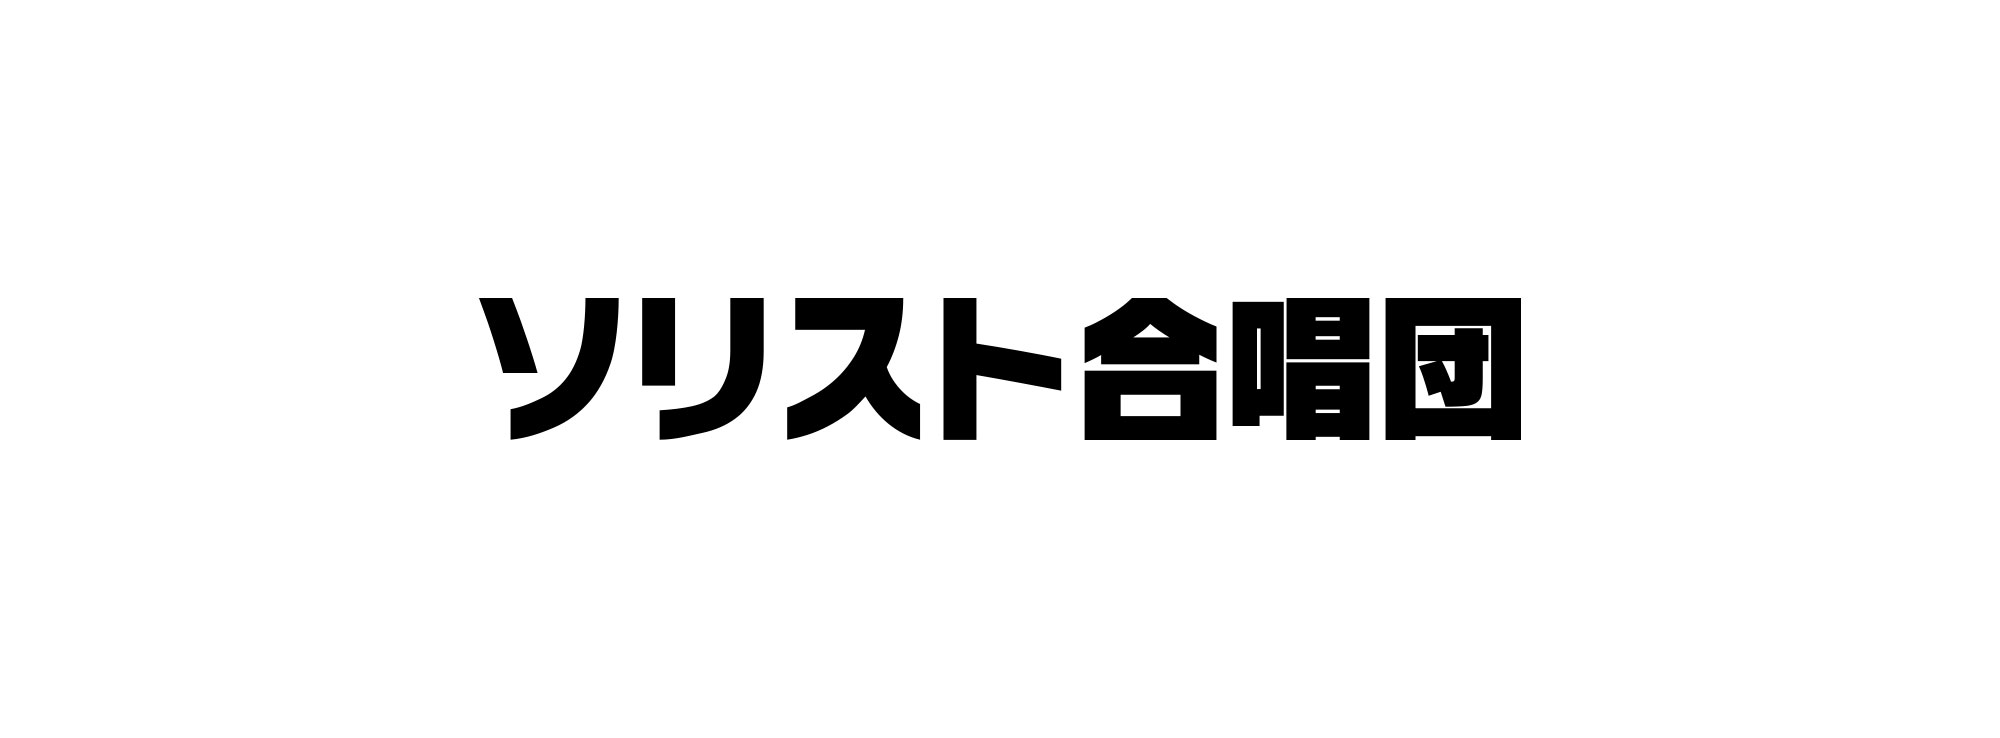 soloist_logo_jp